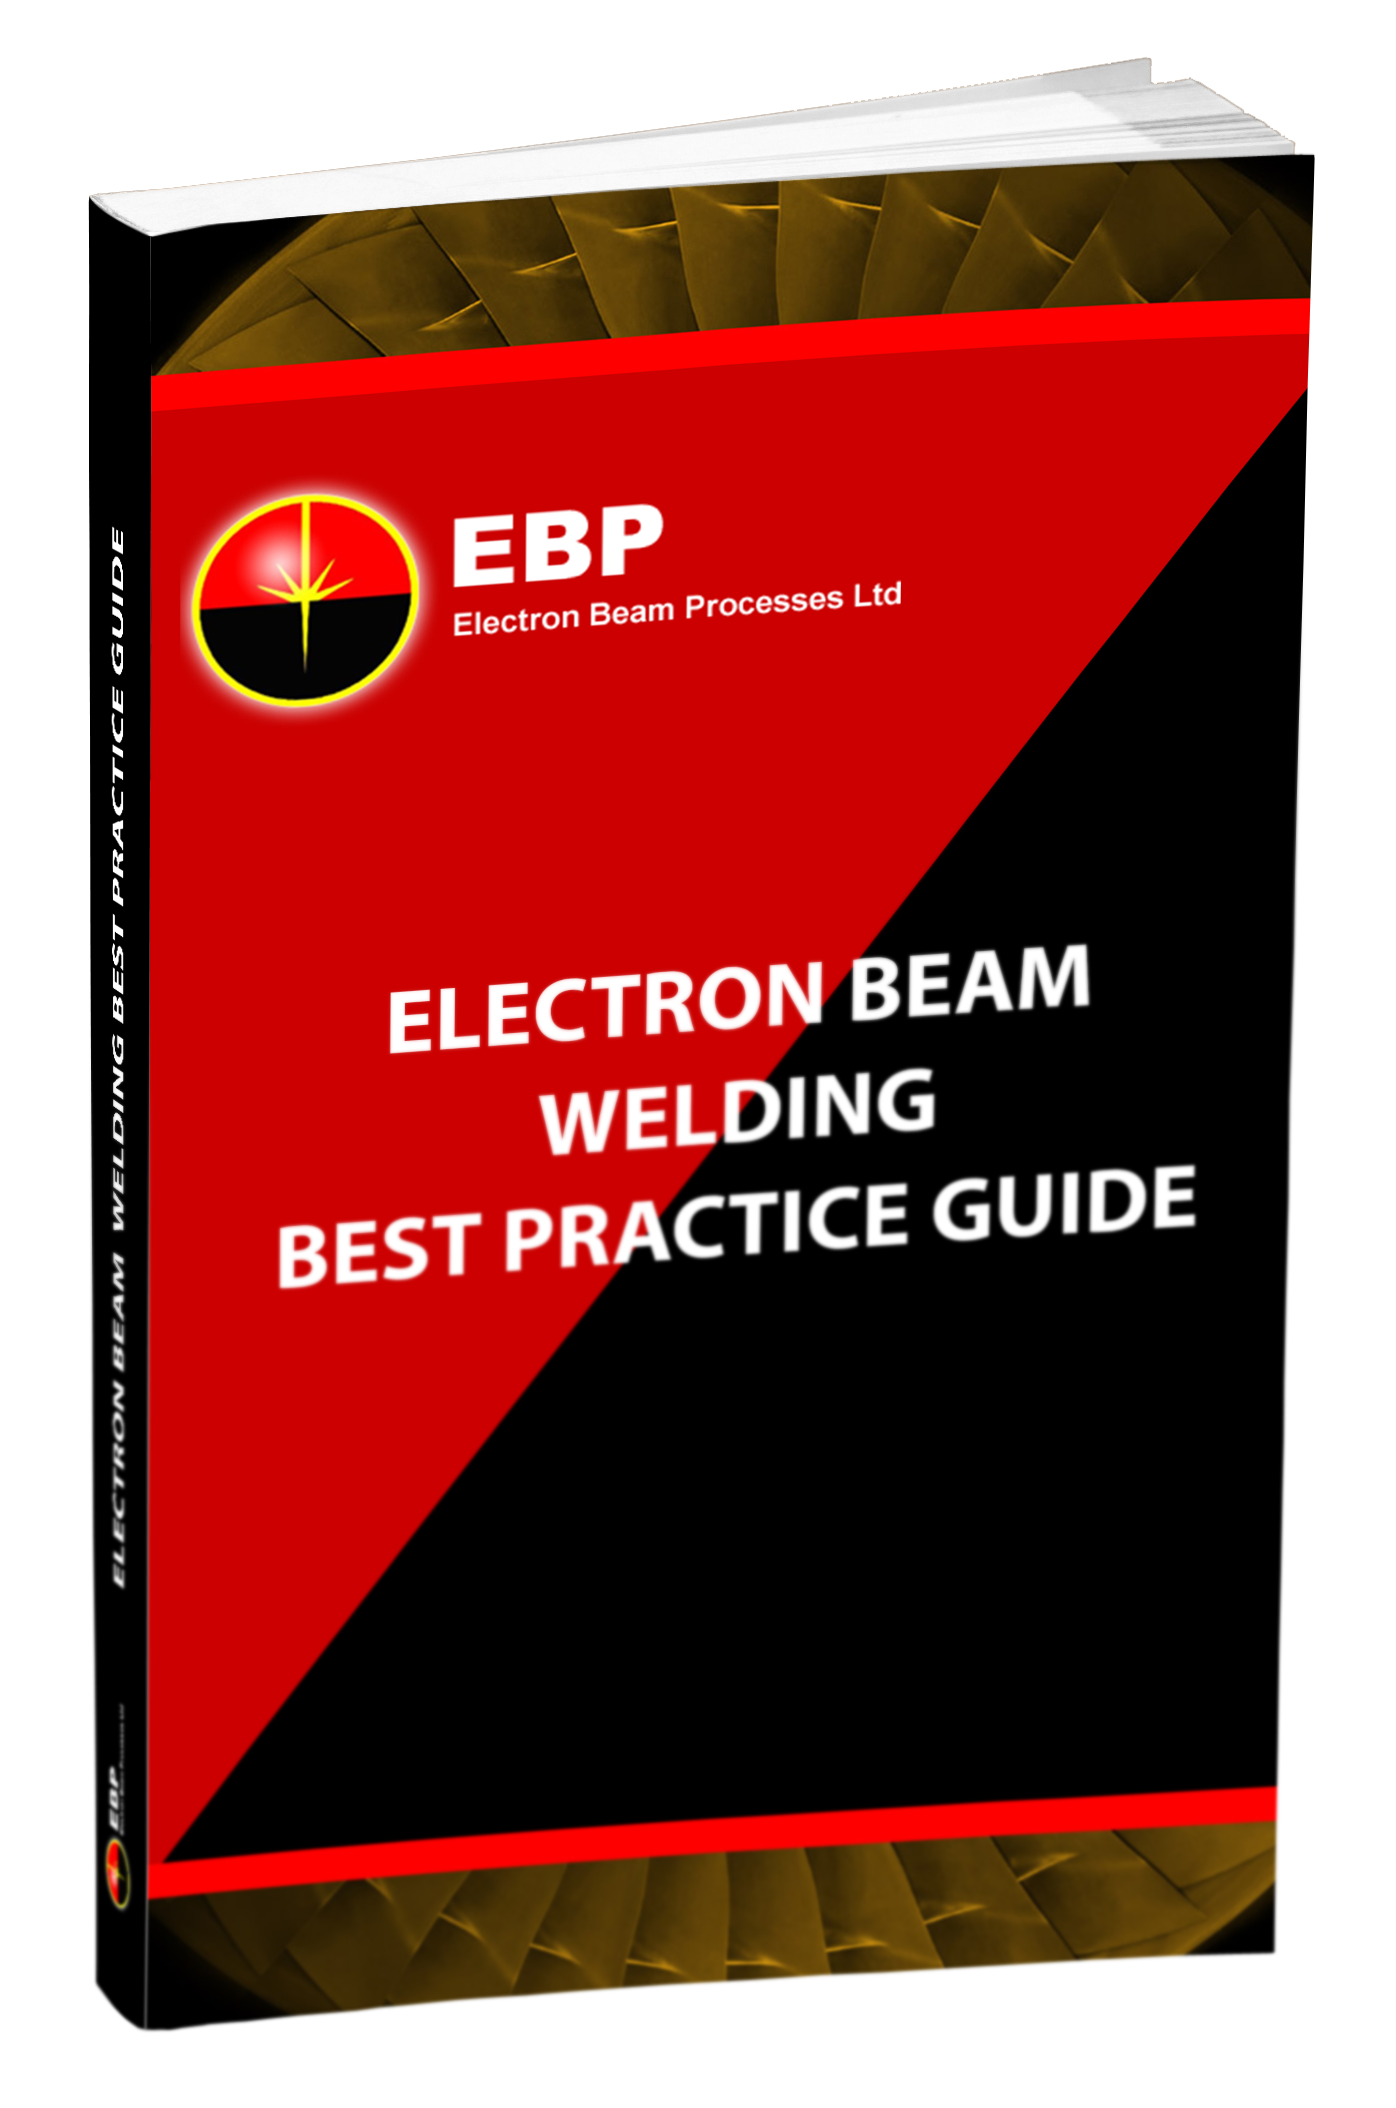 EBP Guide Cover Mock Up